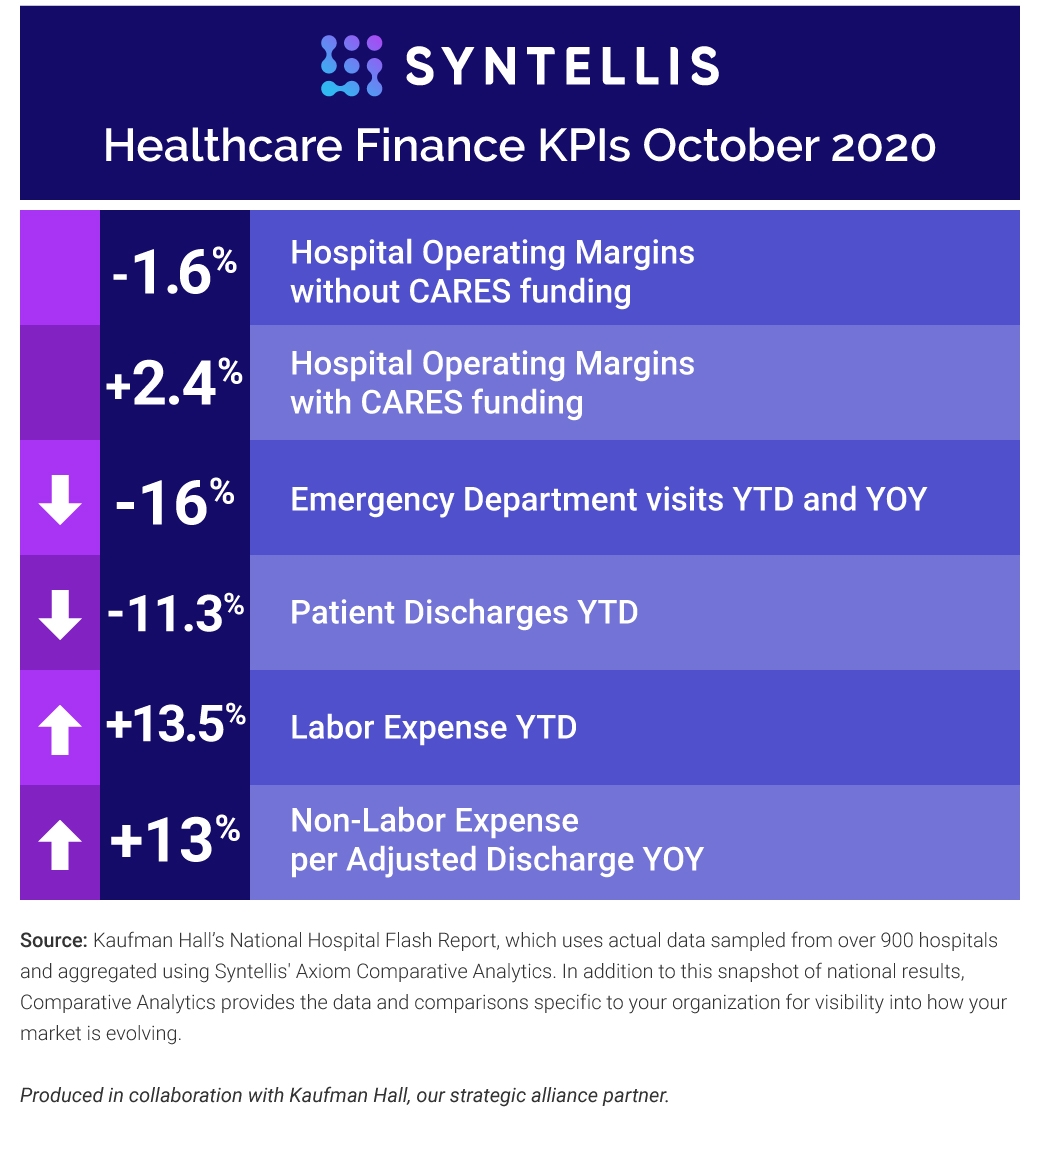 Top 5 Healthcare Finance KPIs for October 2020